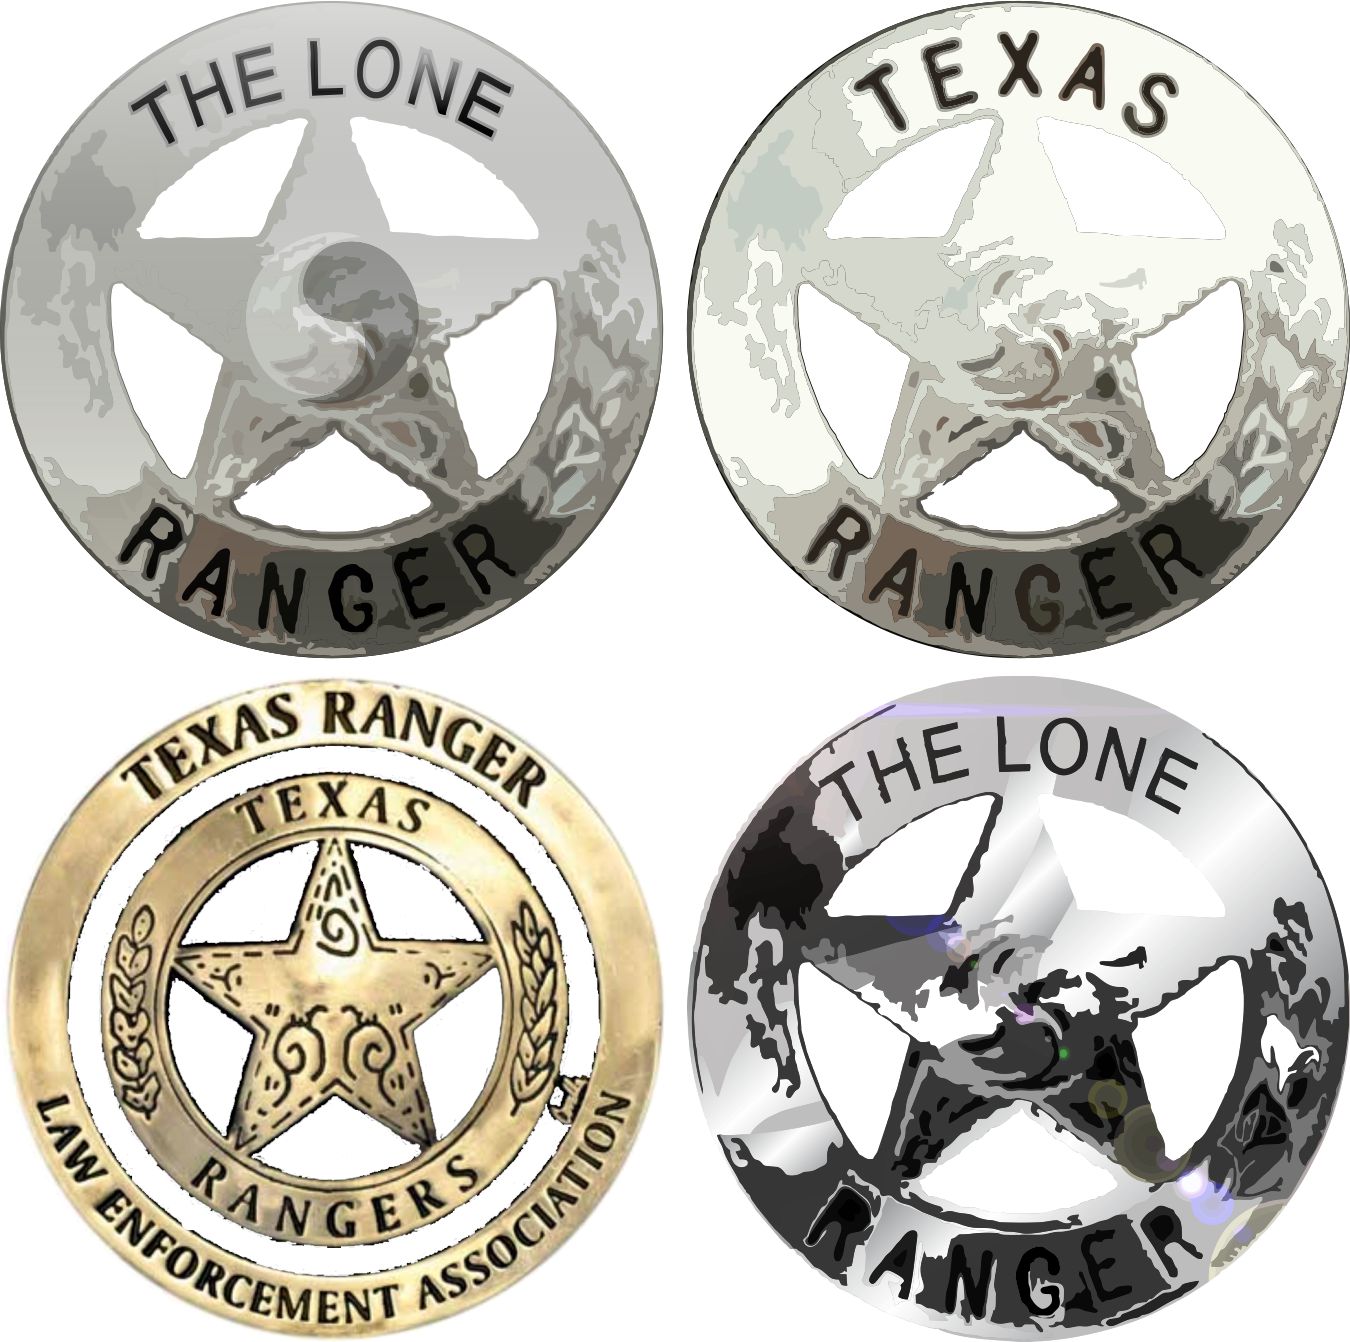 Texas Rangers badge 13